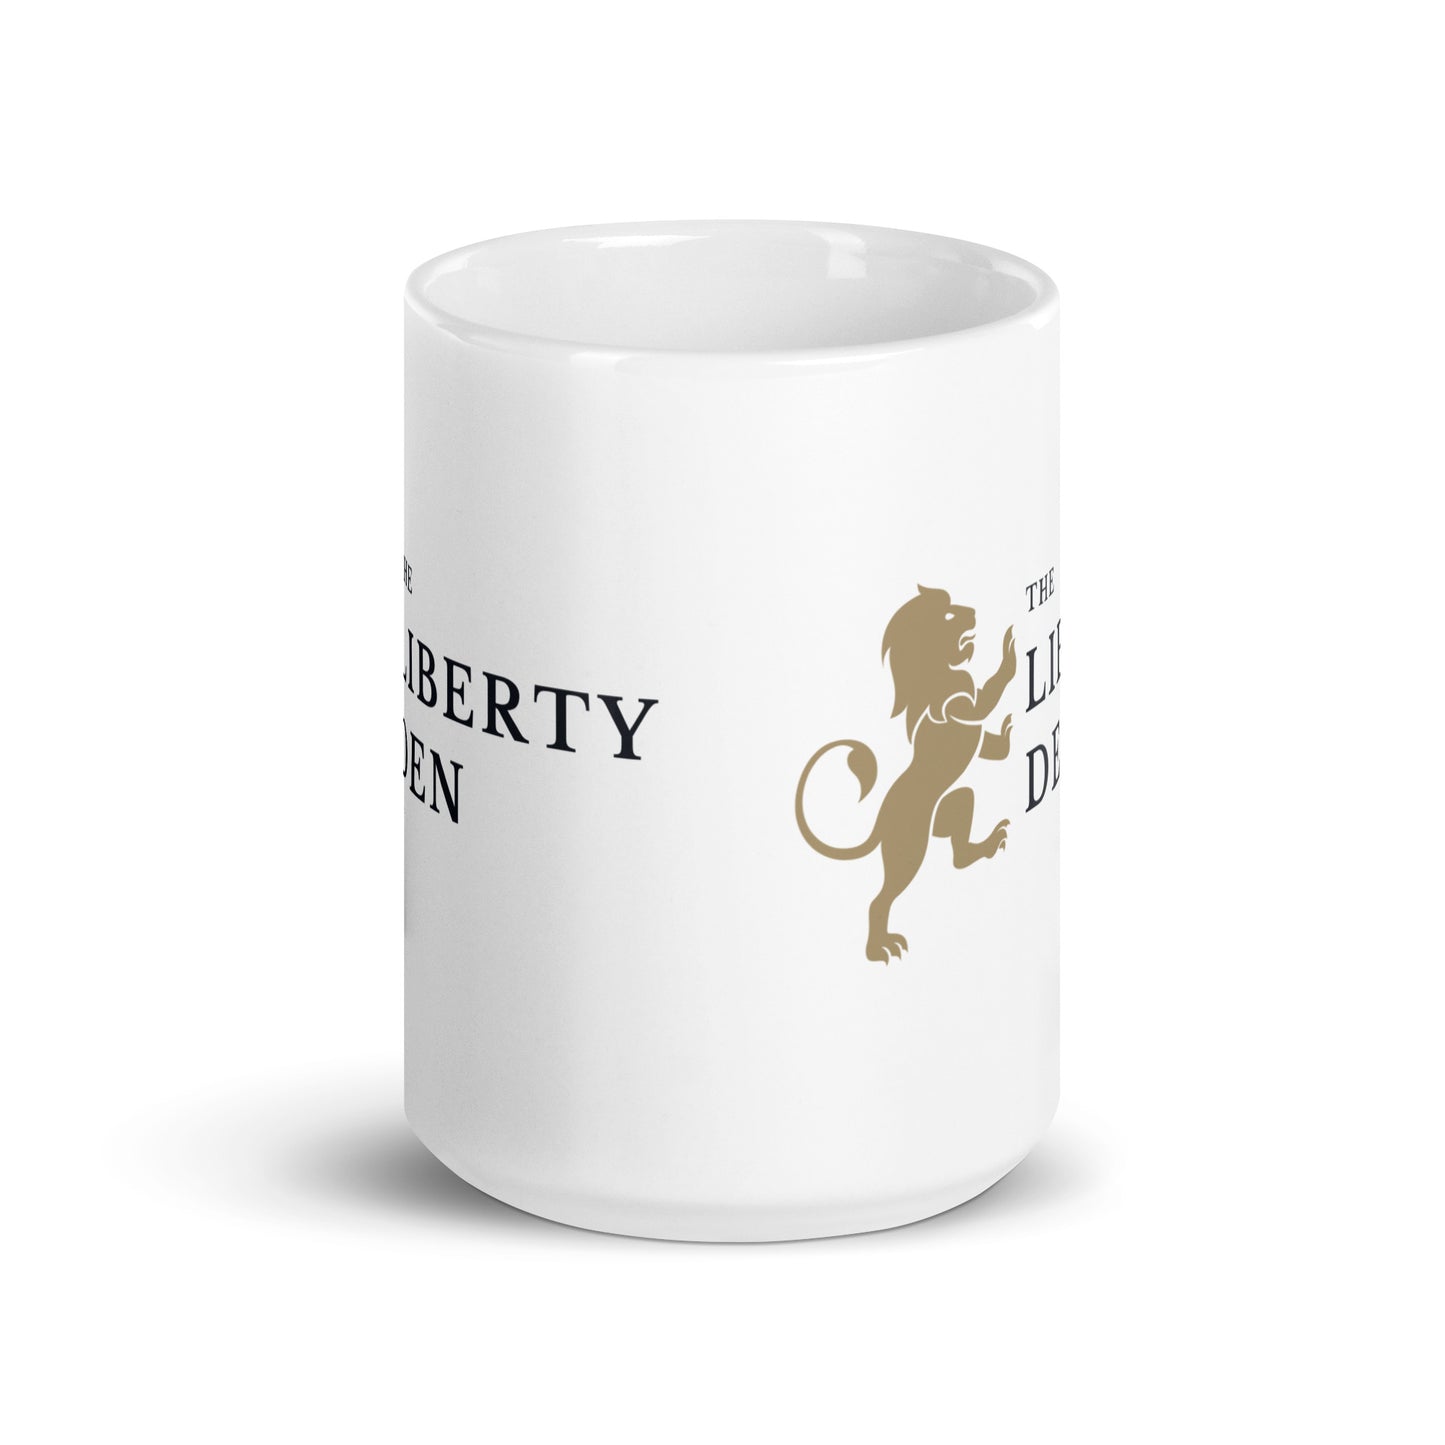 The Liberty Den White Glossy Mug